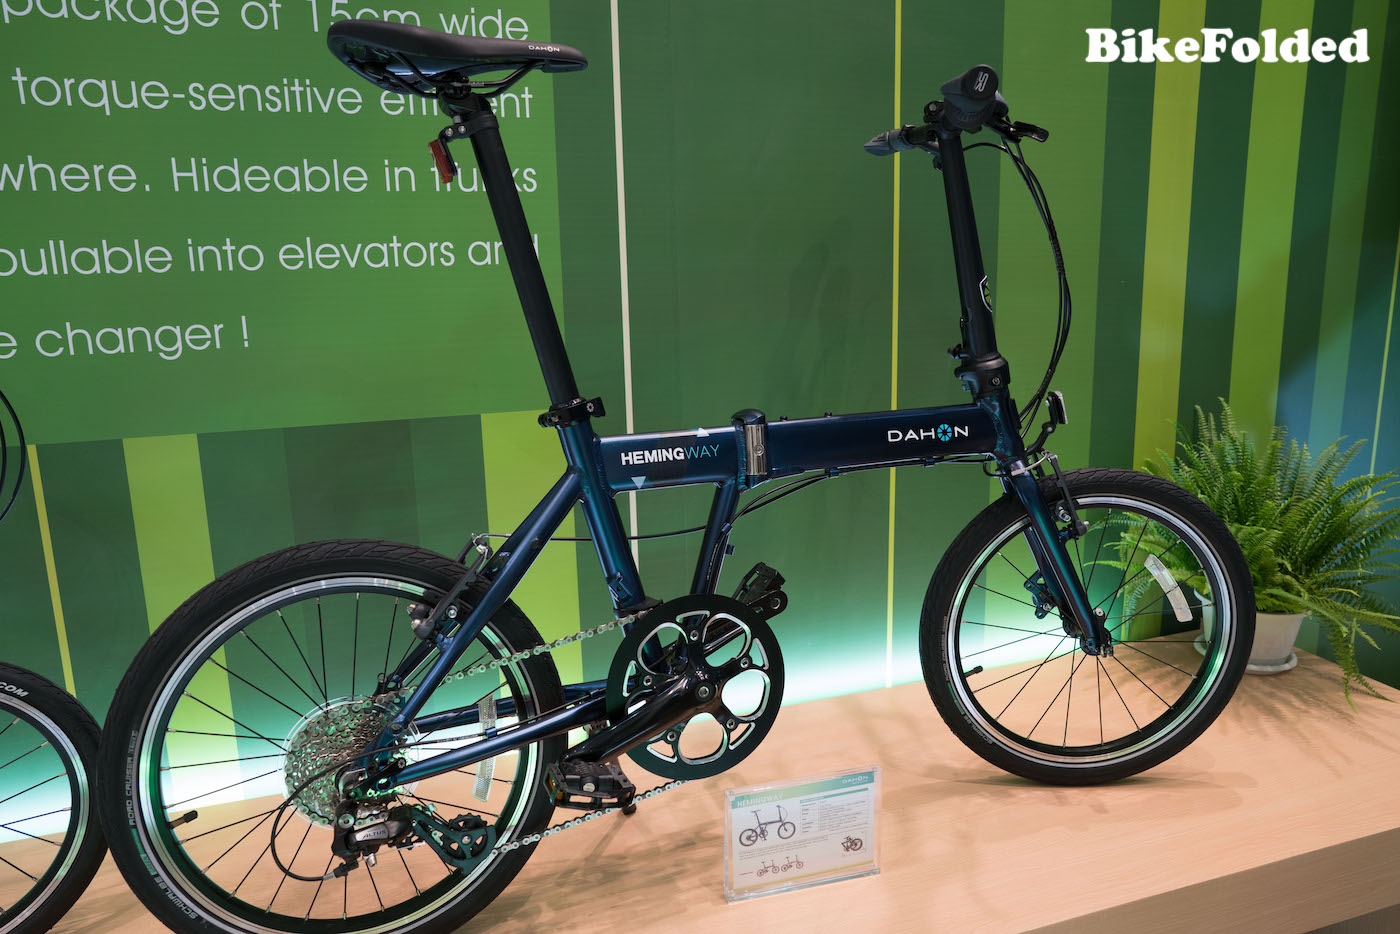 New Dahon Folding Bikes Released in 2019 - BikeFolded